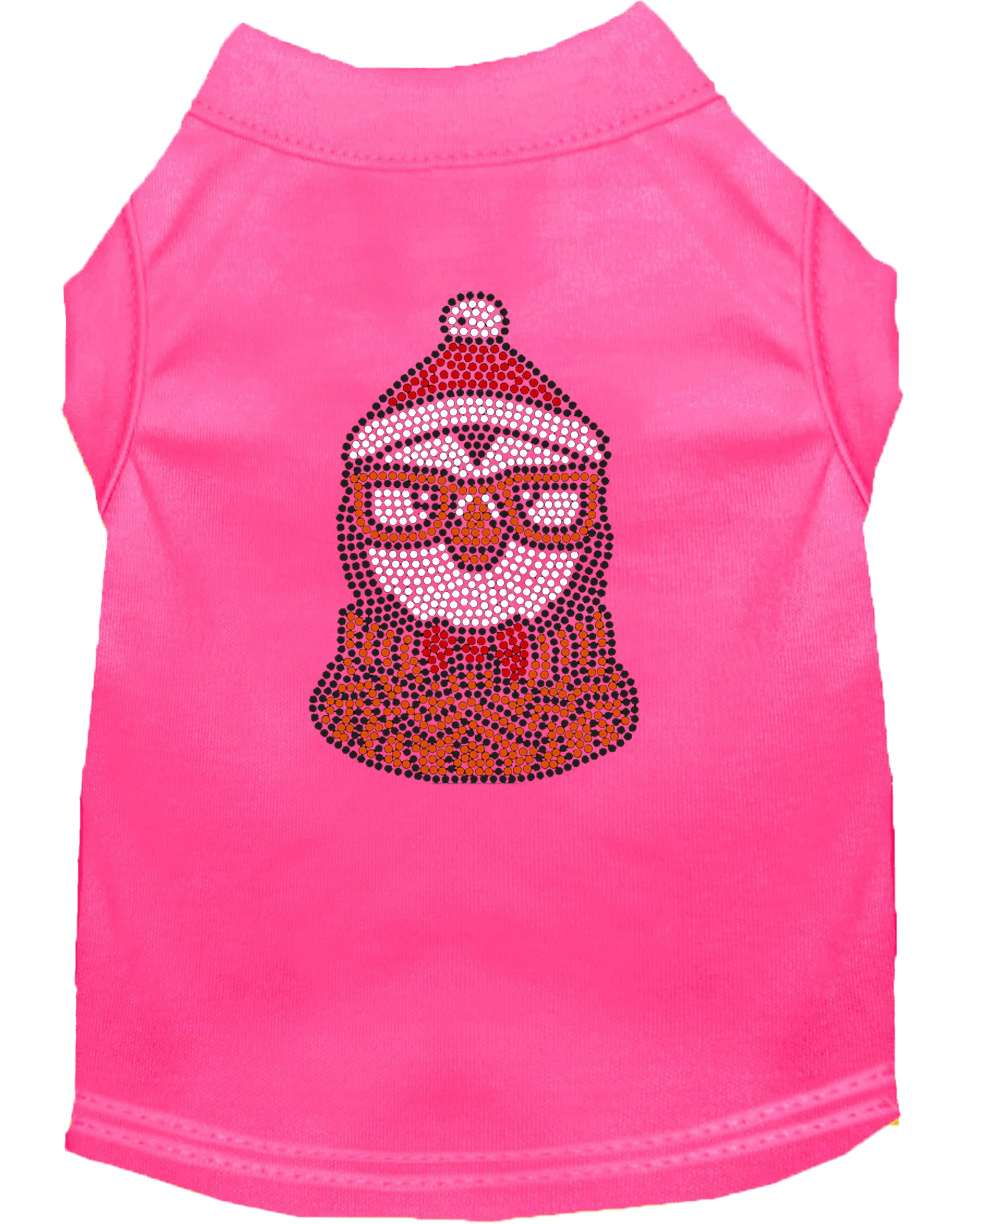 Hipster Penguin Rhinestone Dog Shirt Bright Pink XL